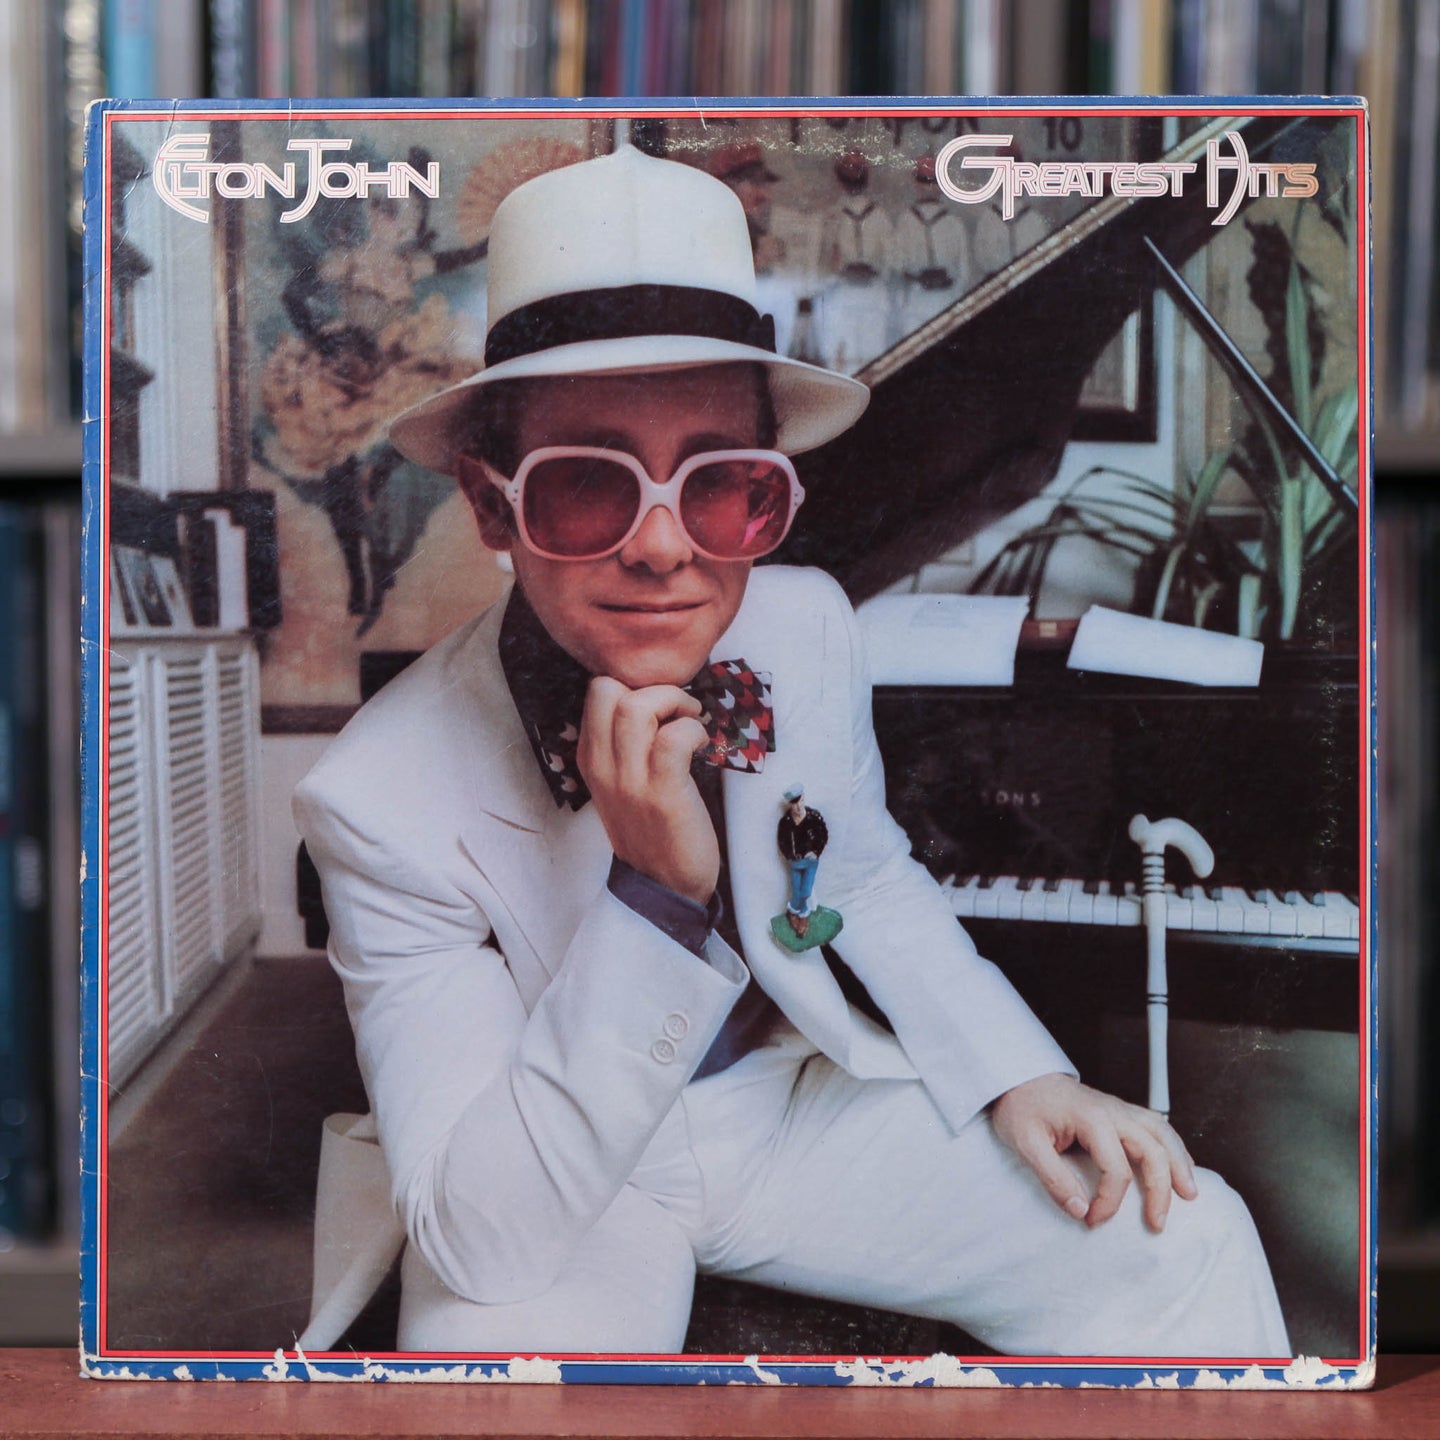 Elton John - Greatest Hits - 1974 MCA, VG/VG